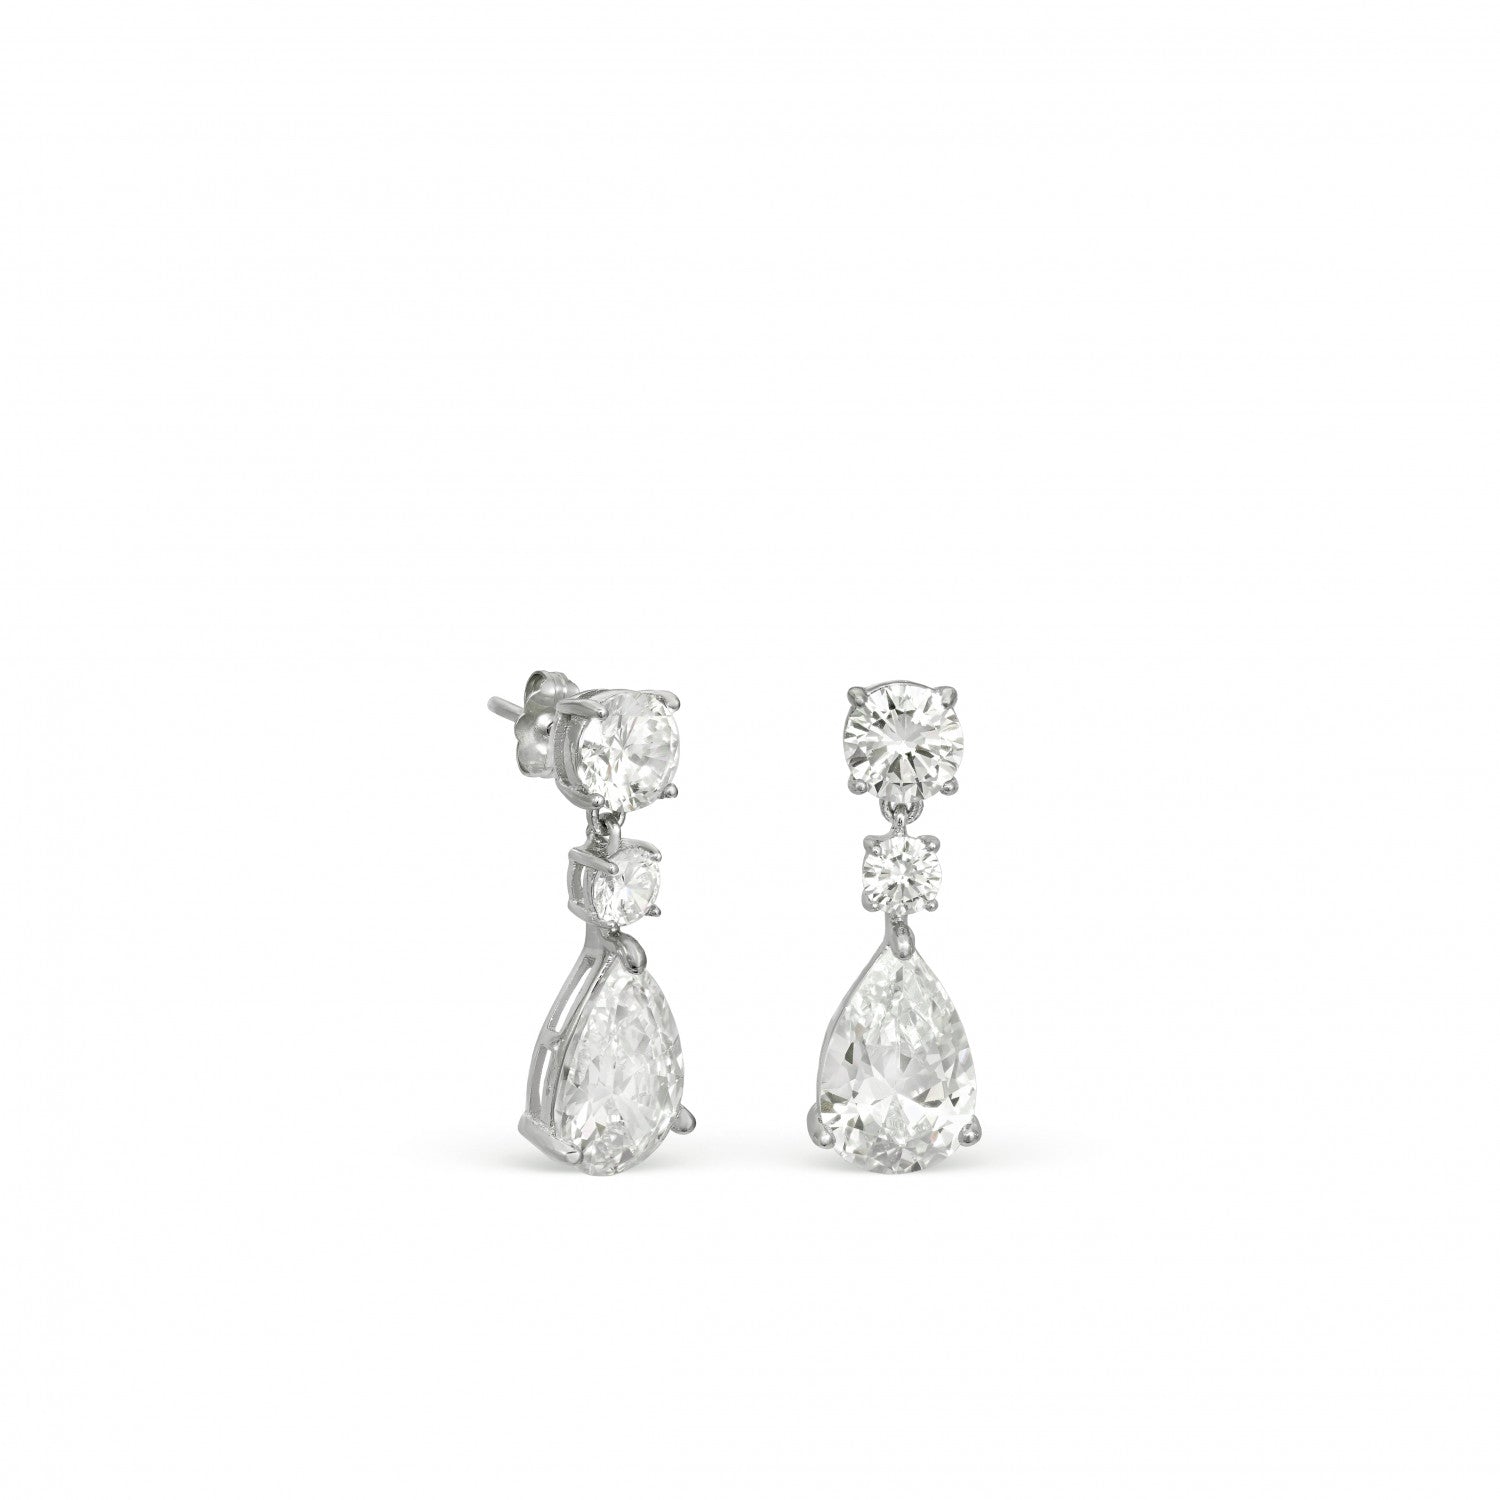 Small monochrome bridal earrings with zirconia stones